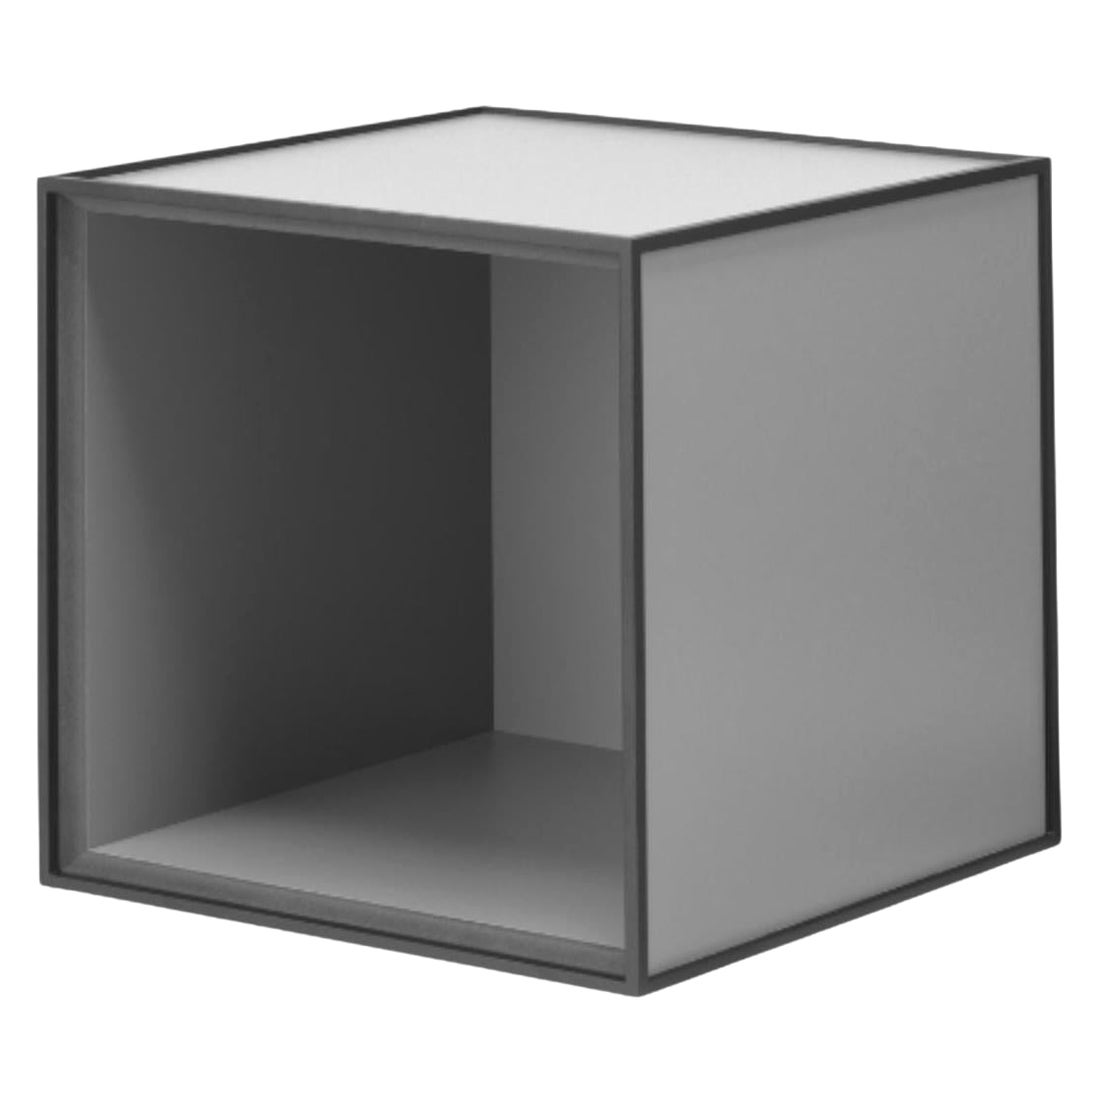 35 Dark Grey Frame Box by Lassen